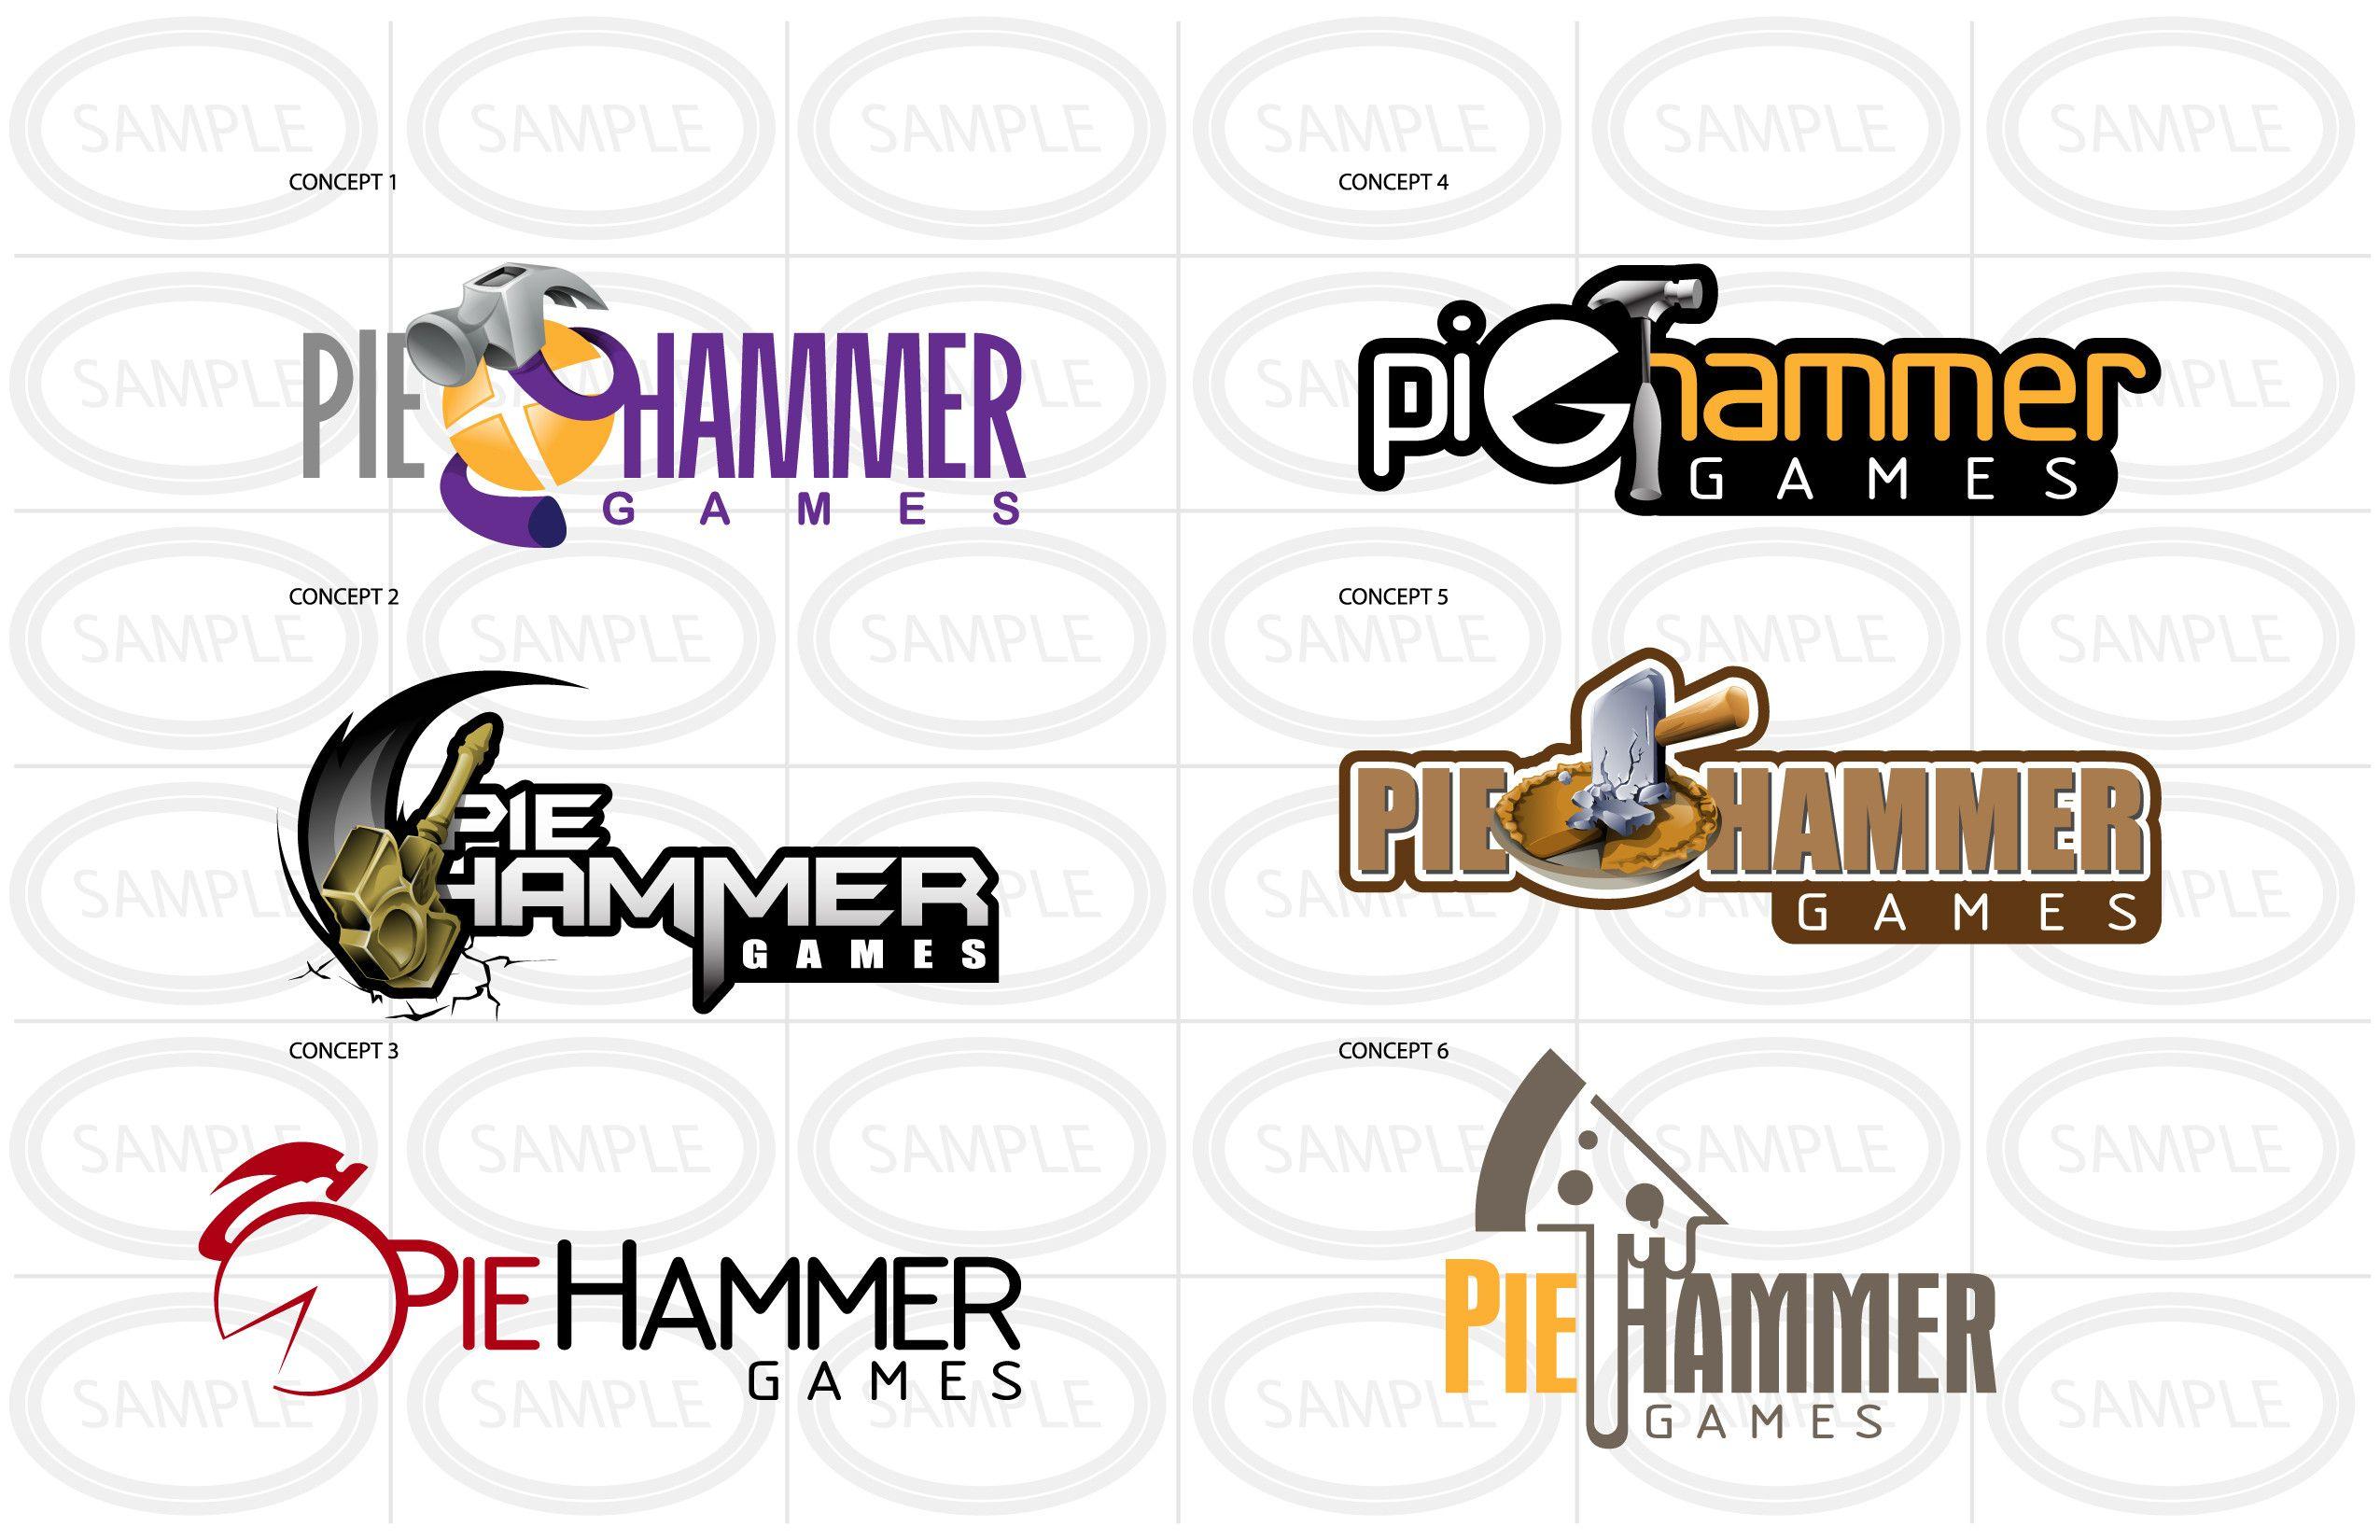 Game Company Logo - Feedback on game company logo